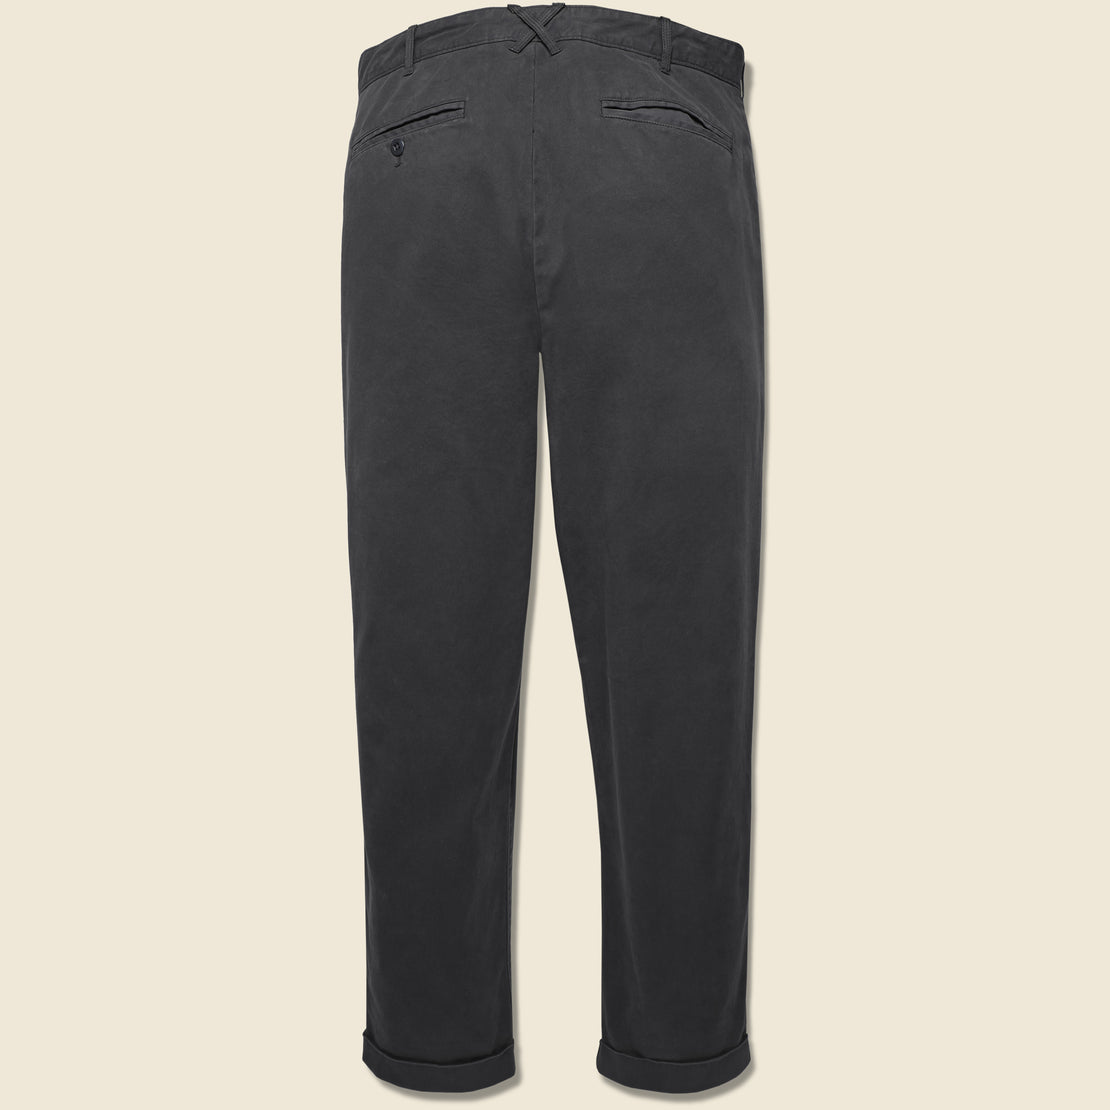 Standard Pleated Chino - Black - Alex Mill - STAG Provisions - Pants - Twill